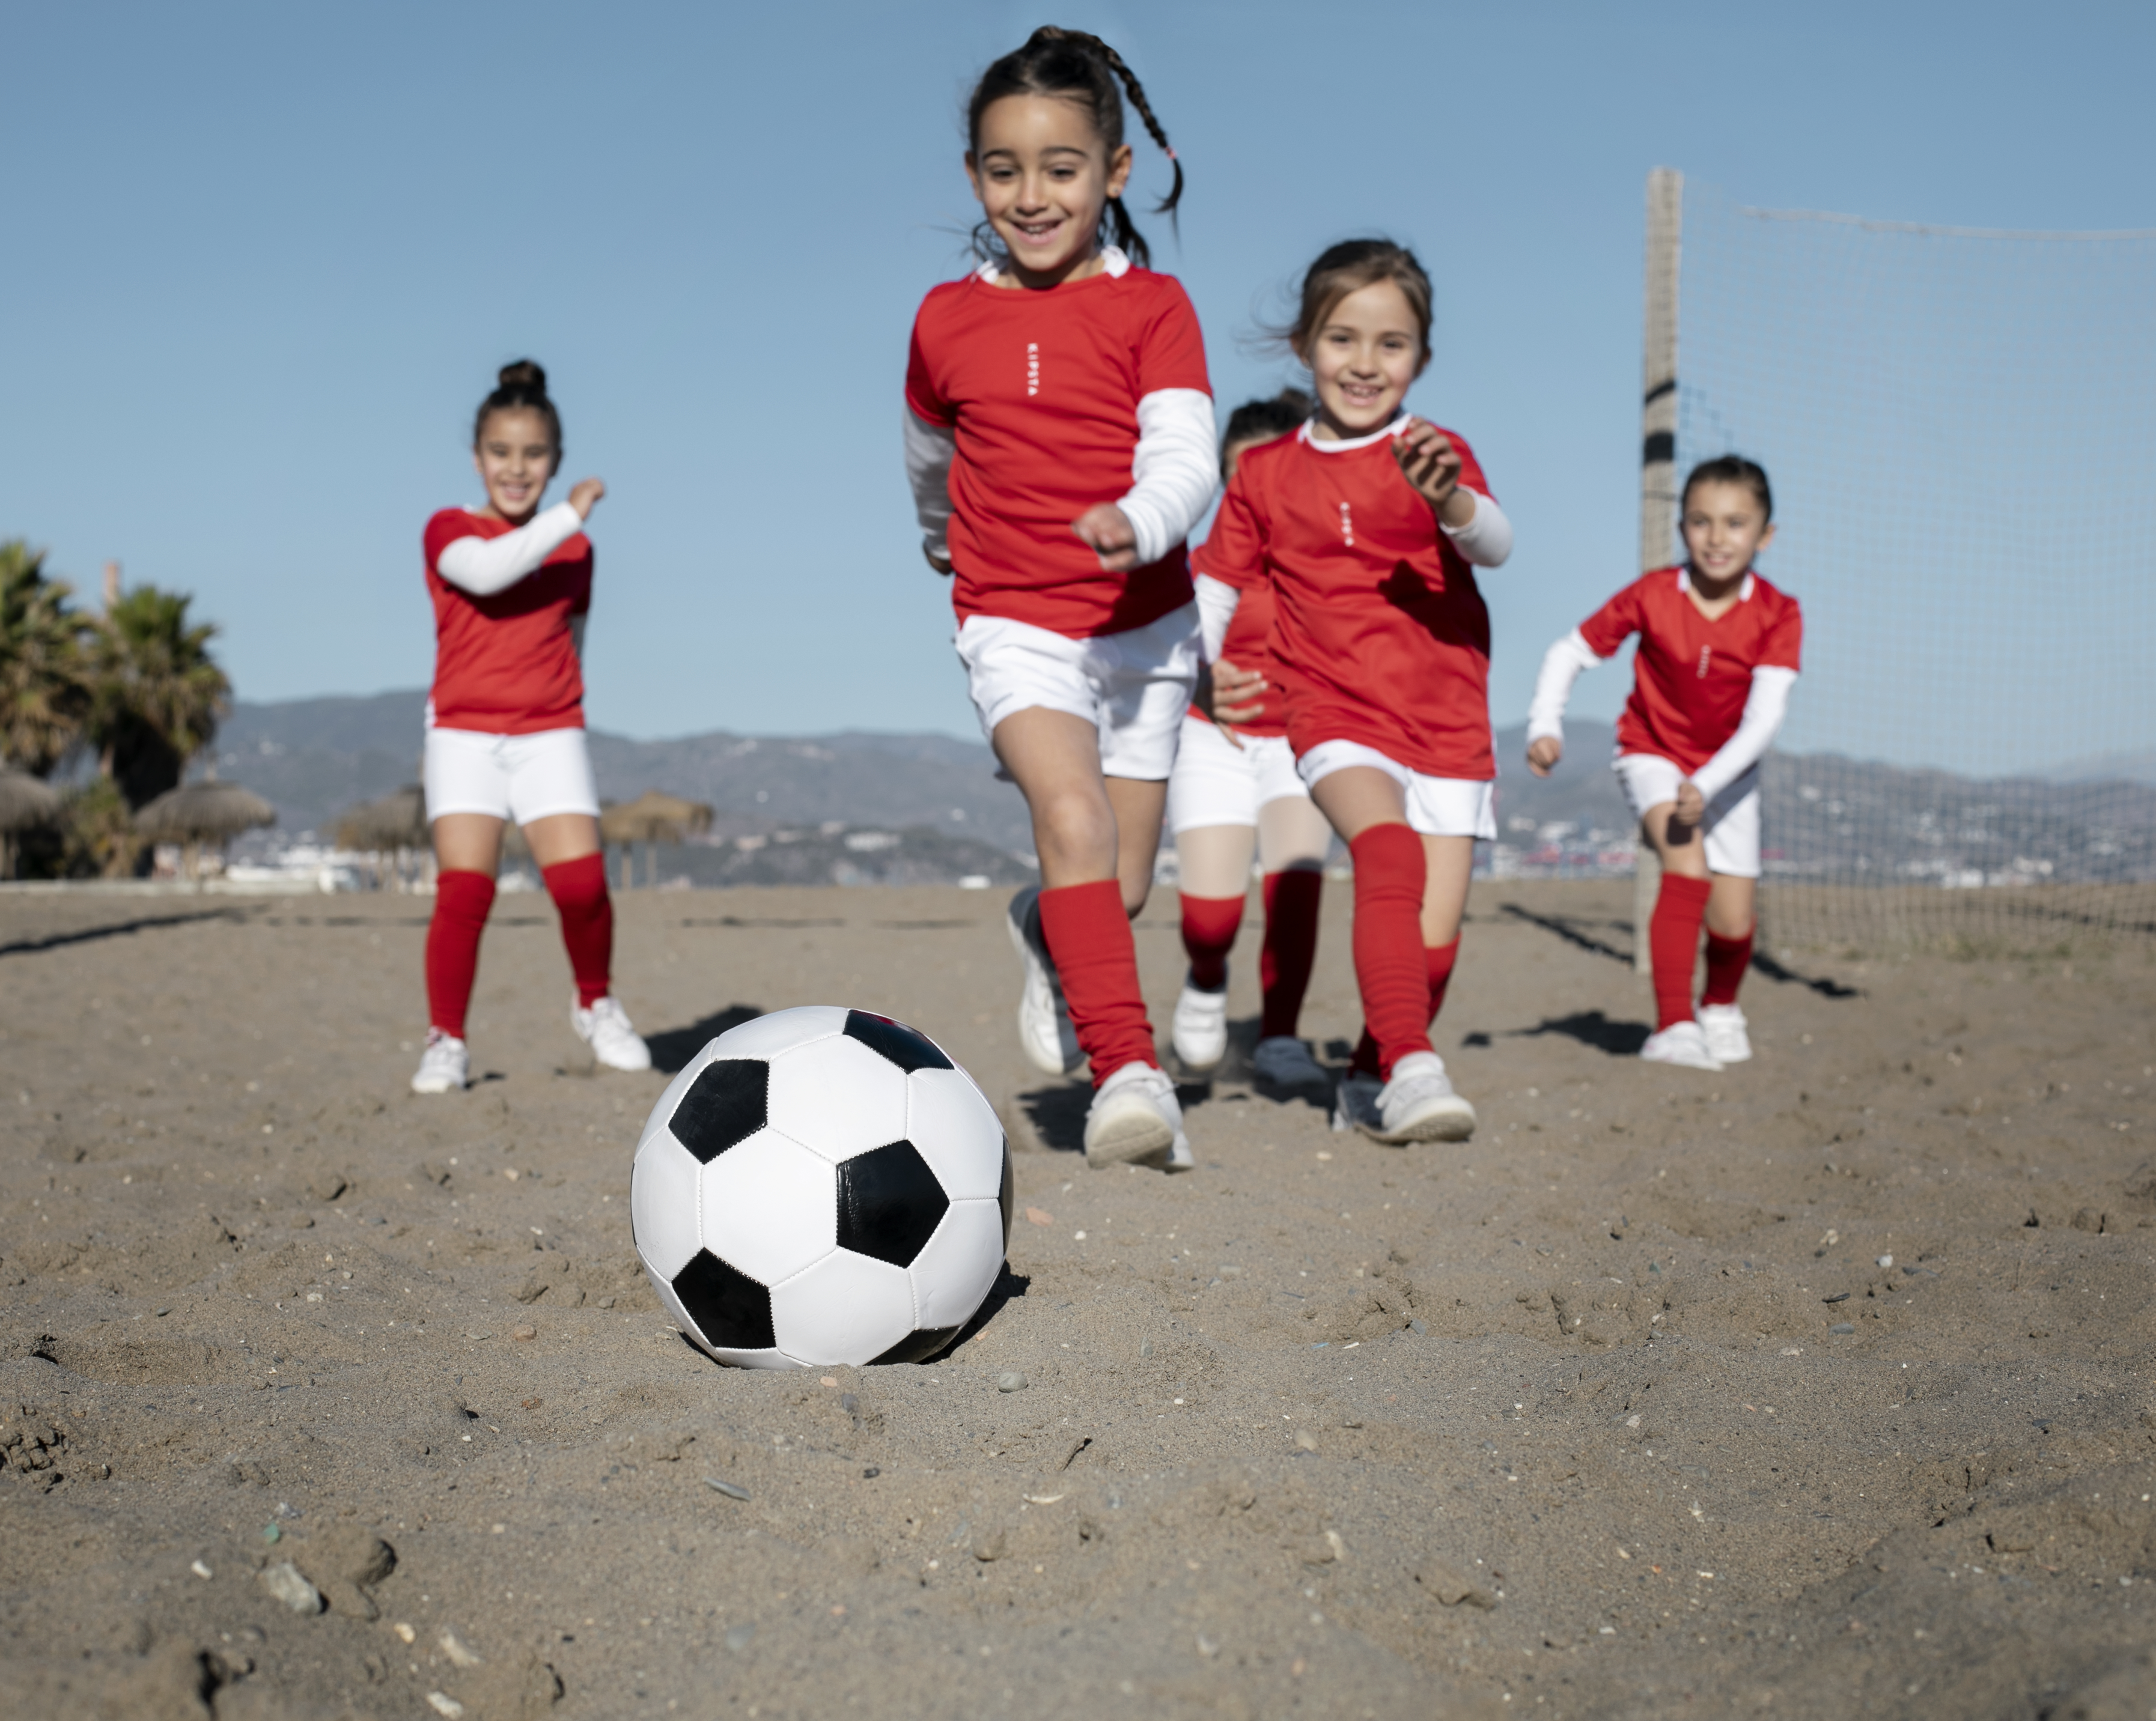 10 Reasons we Need sports in School curriculum